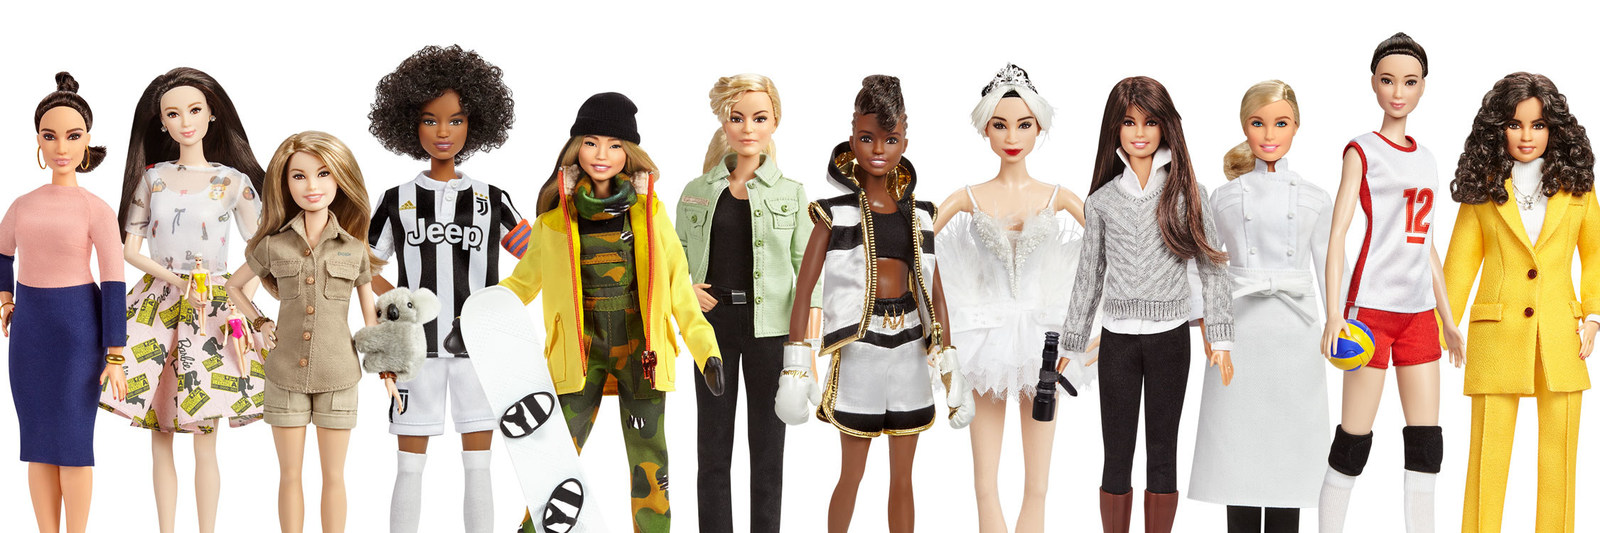 Mattel debuts 17 new Barbie Global Role Models dolls and 3 Inspiring